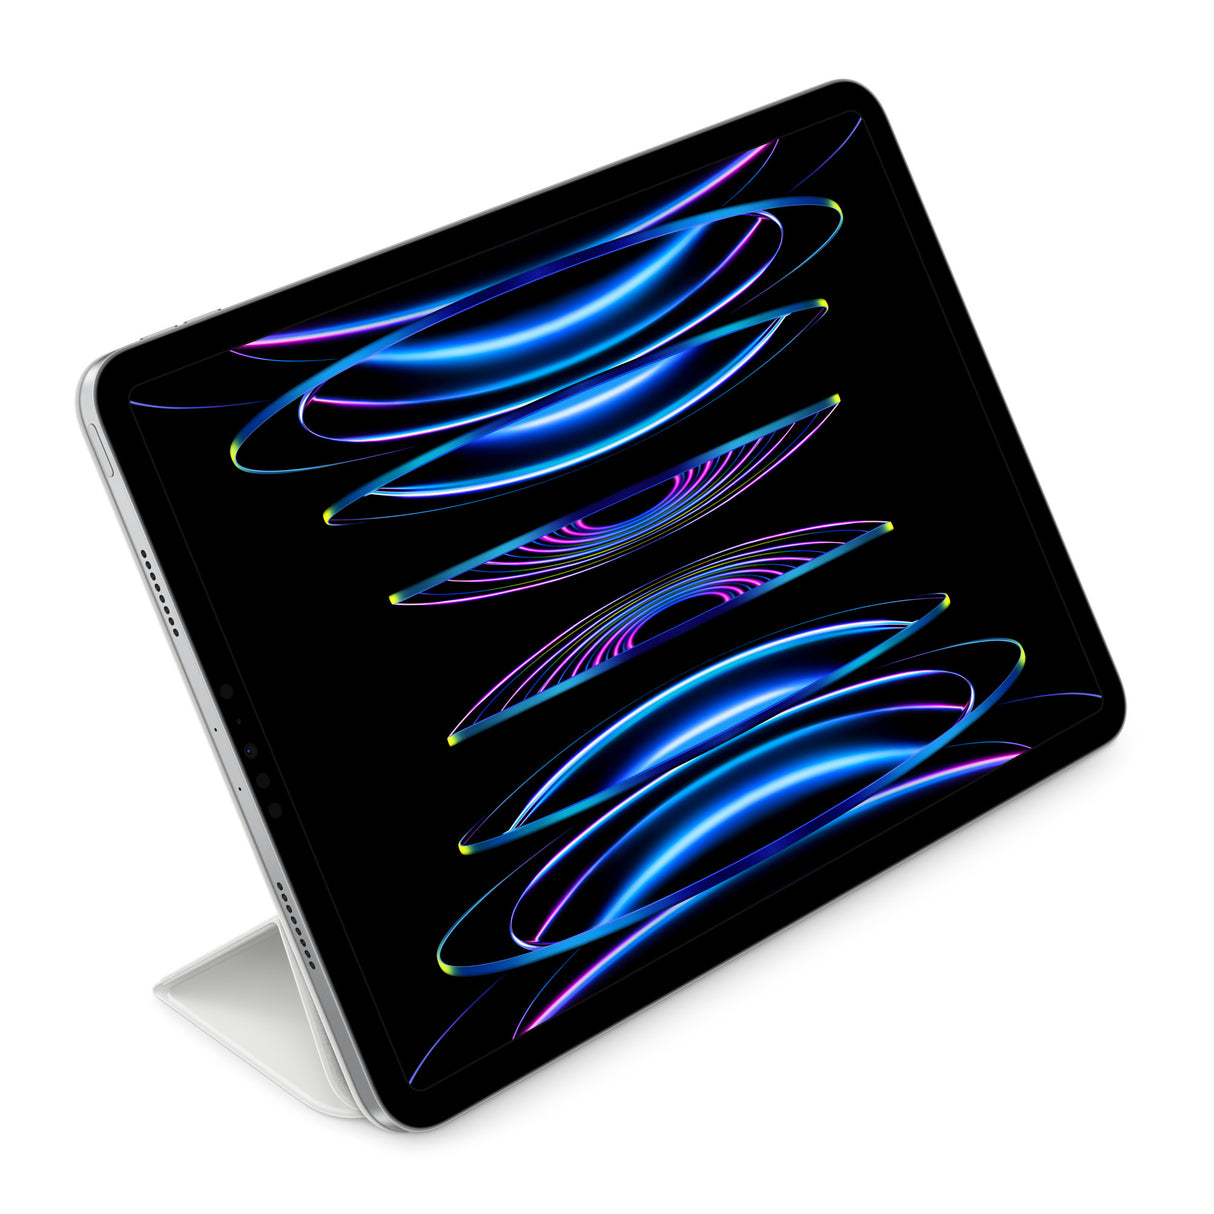 Smart Folio for iPad Pro 11-inch (4th generation) - White  OB